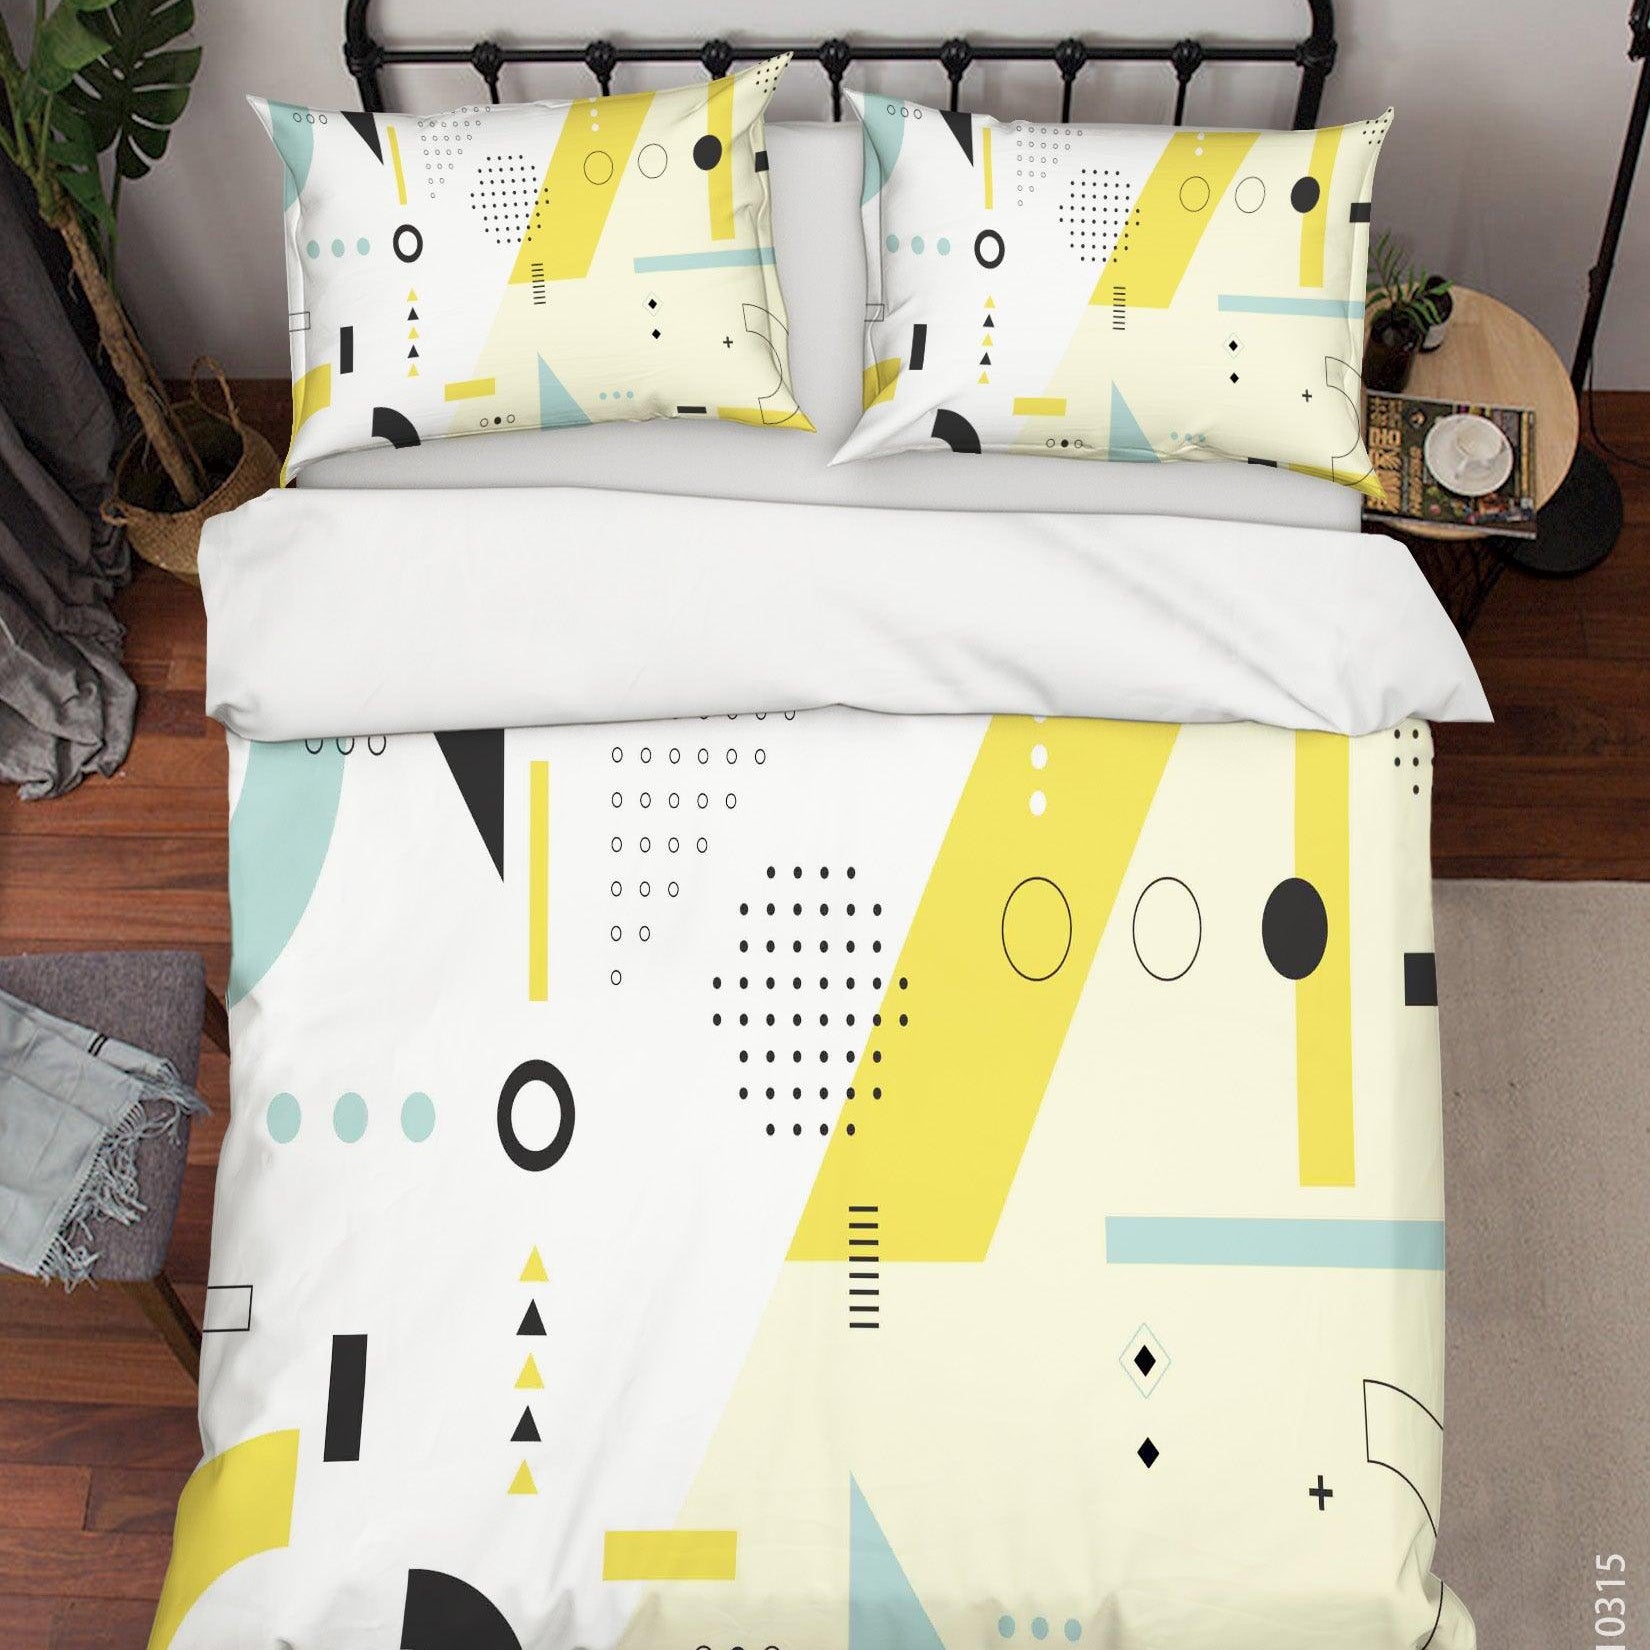 3D Abstract Color Geometry Quilt Cover Set Bedding Set Duvet Cover Pillowcases 81- Jess Art Decoration